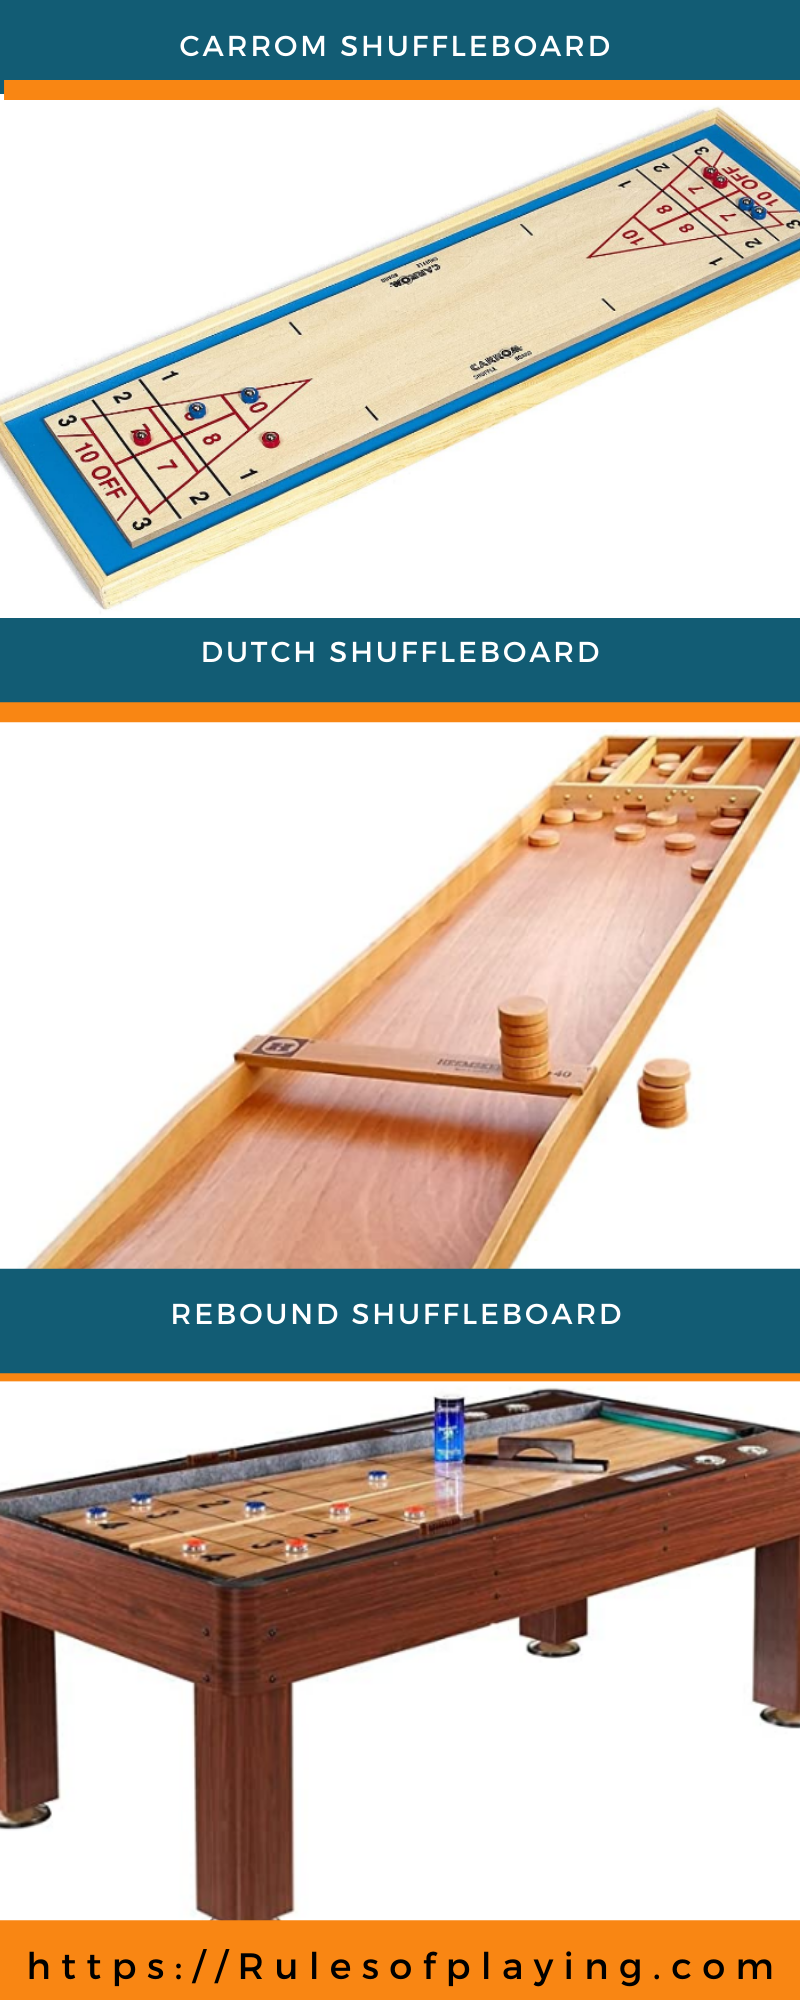 Carrom Shuffleboard, Dutch Shuffleboard & Rebound Shuffleboard